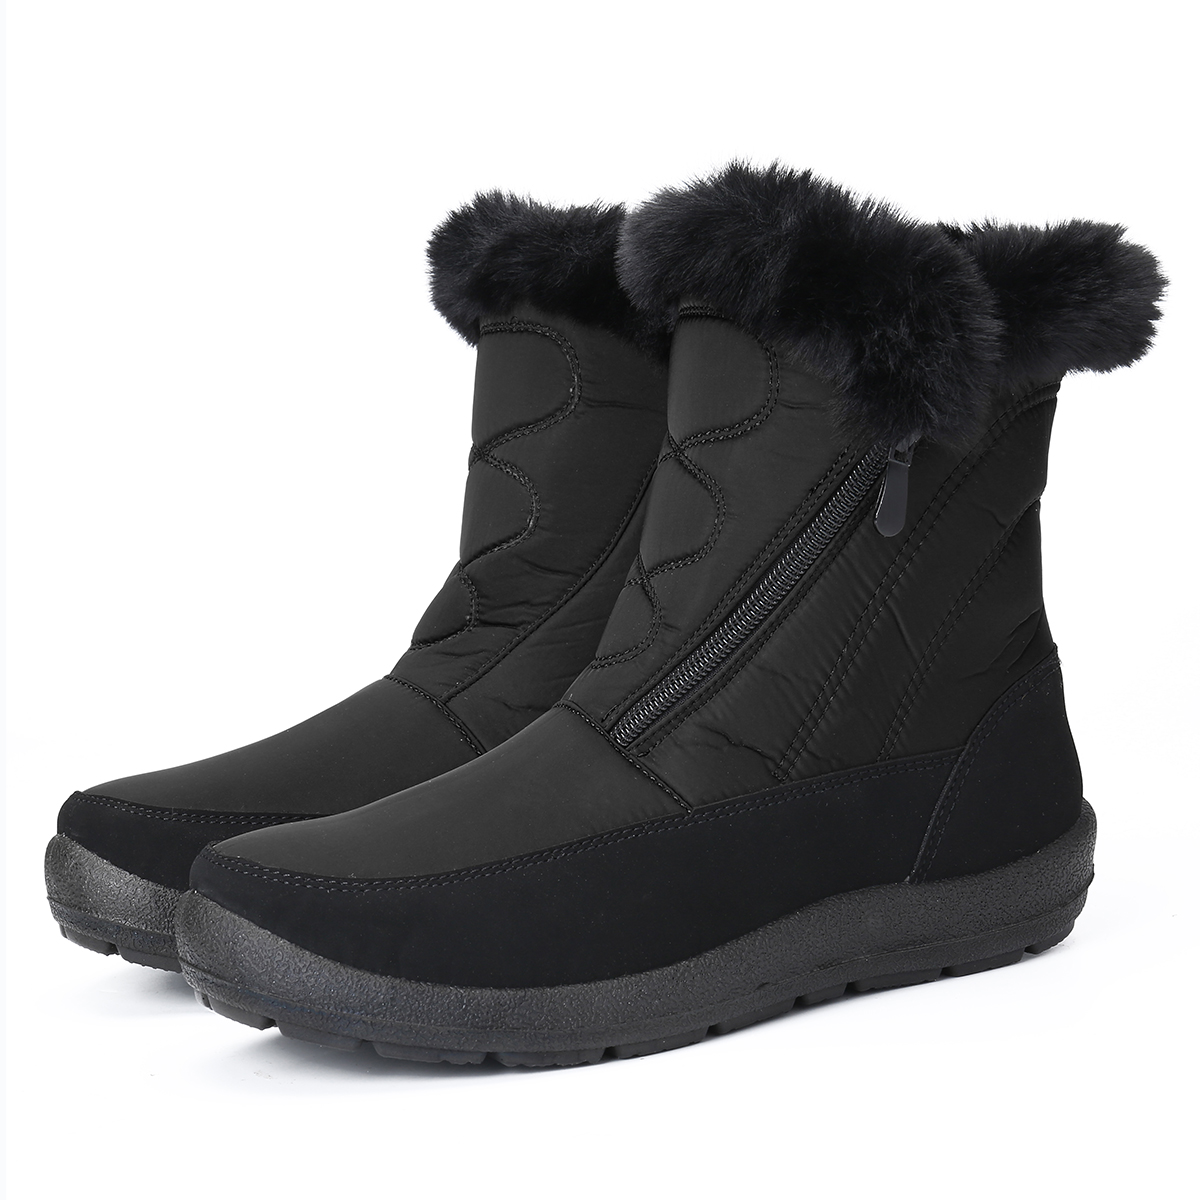 gracosy Unisex Snow Boots, Winter Fur 